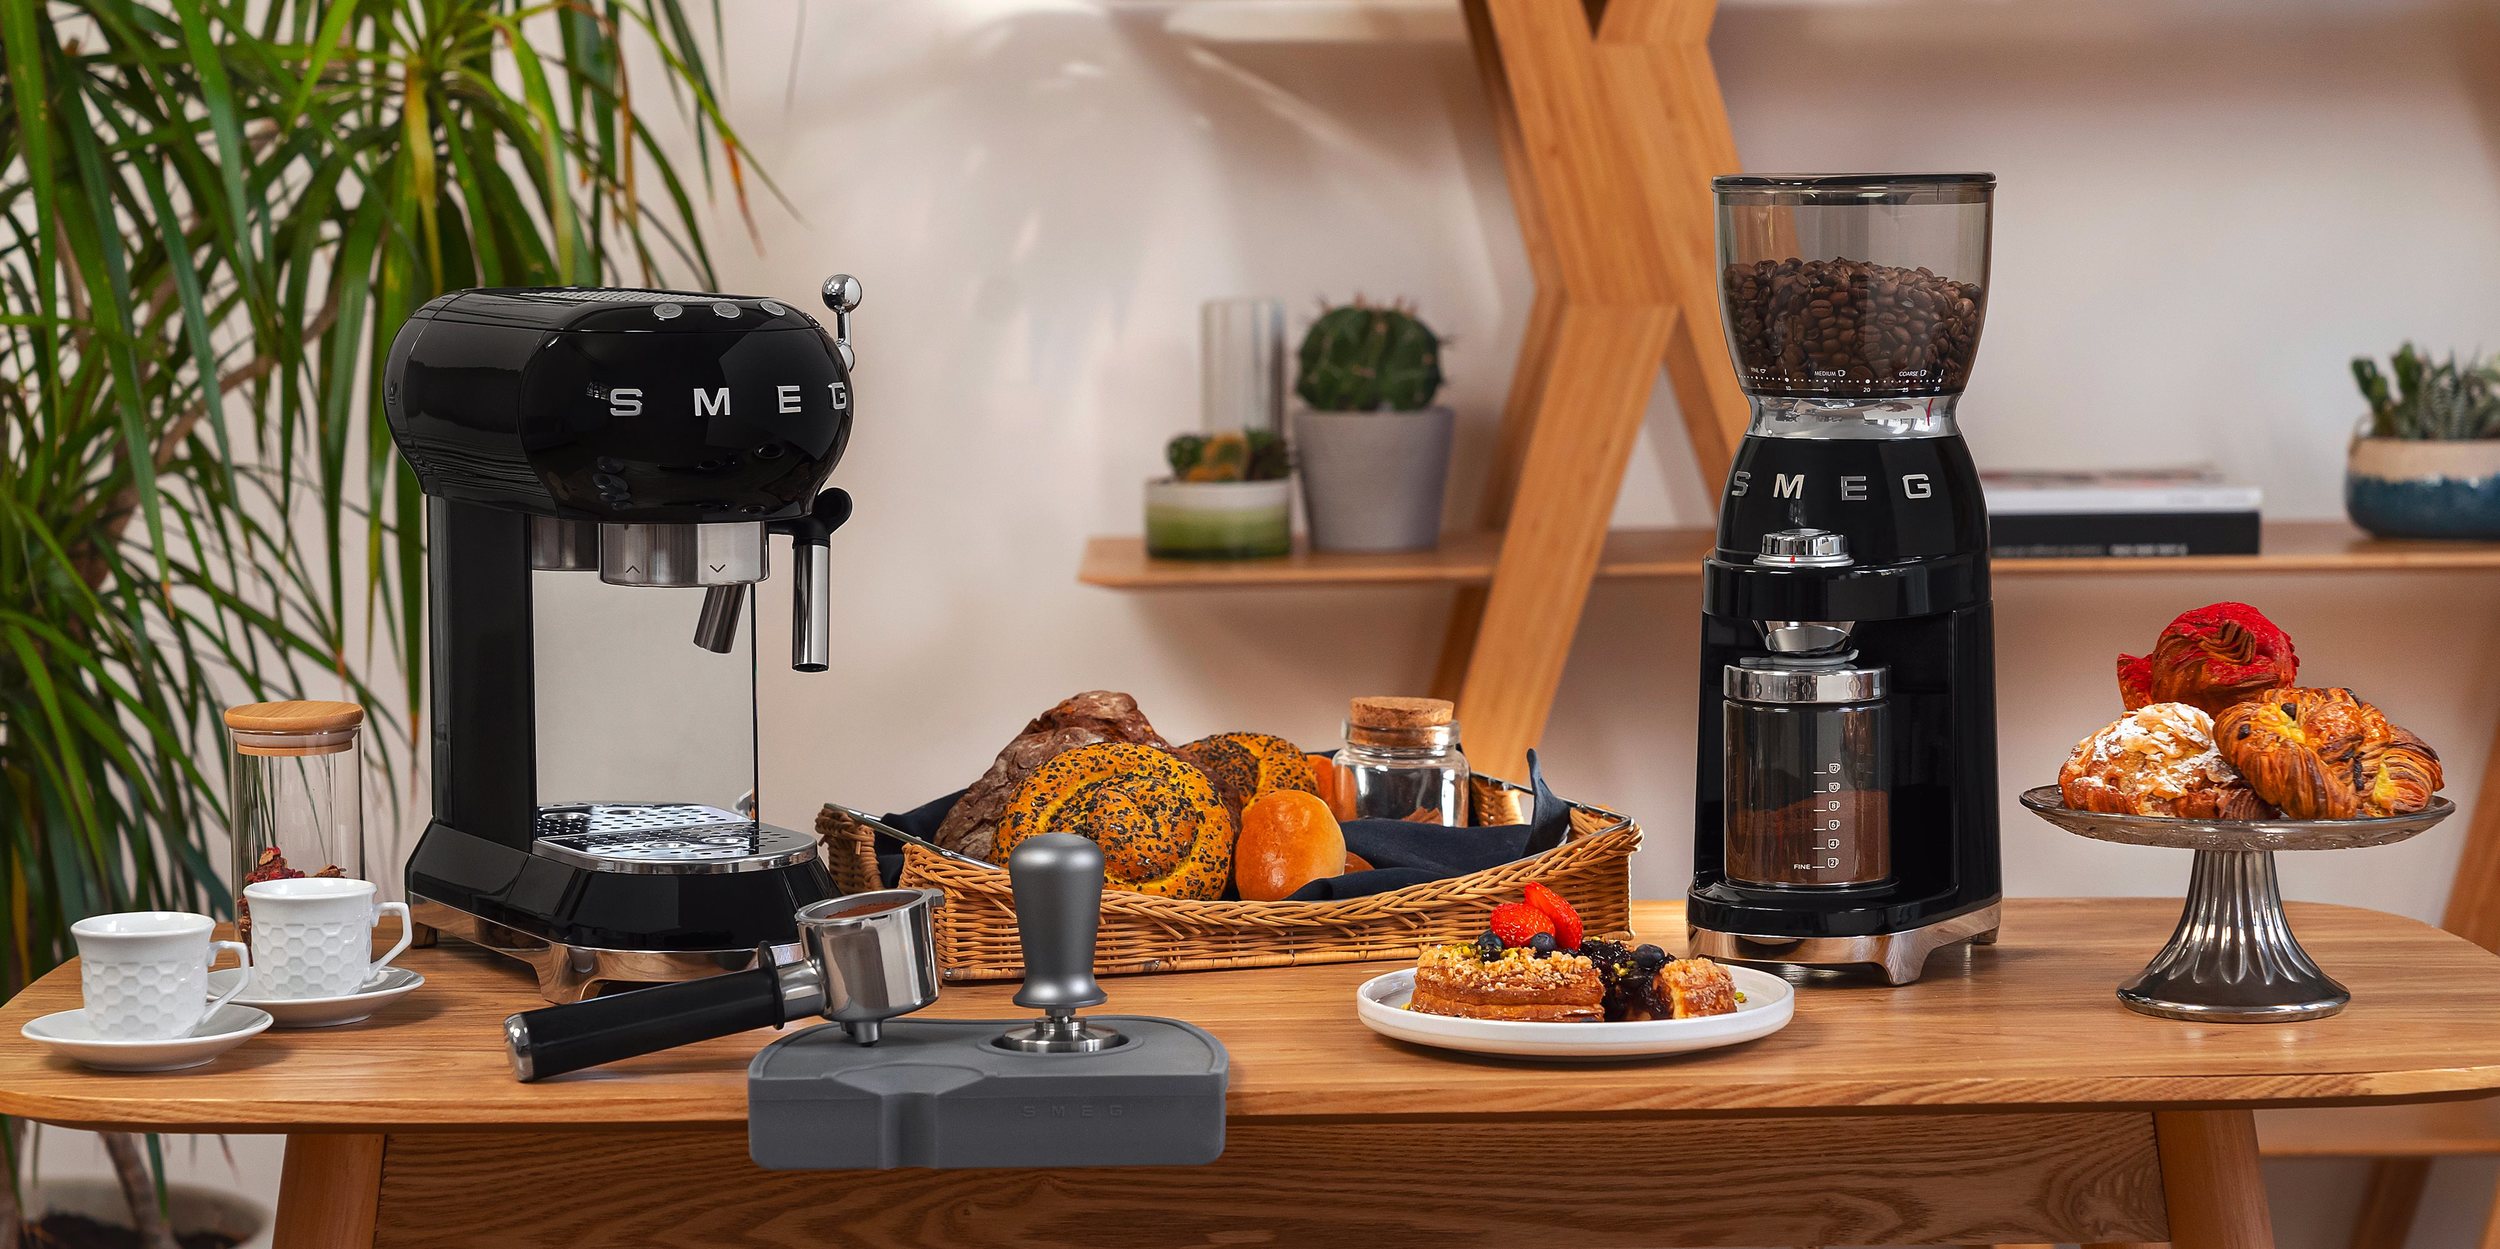 Smeg - Coffee grinder cgf01